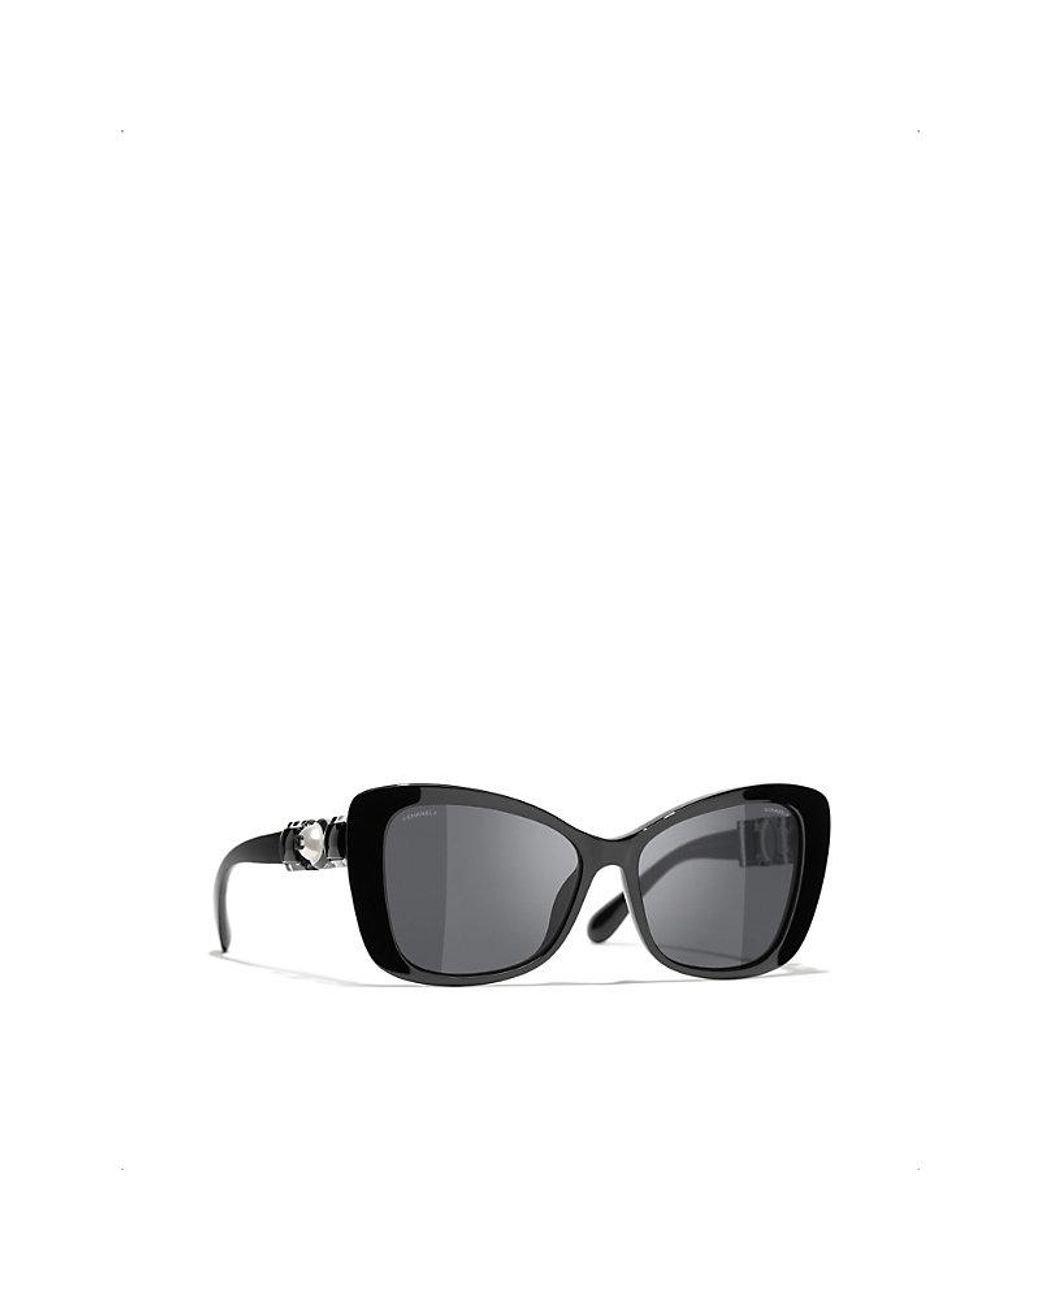 Chanel Butterfly Sunglasses in Black